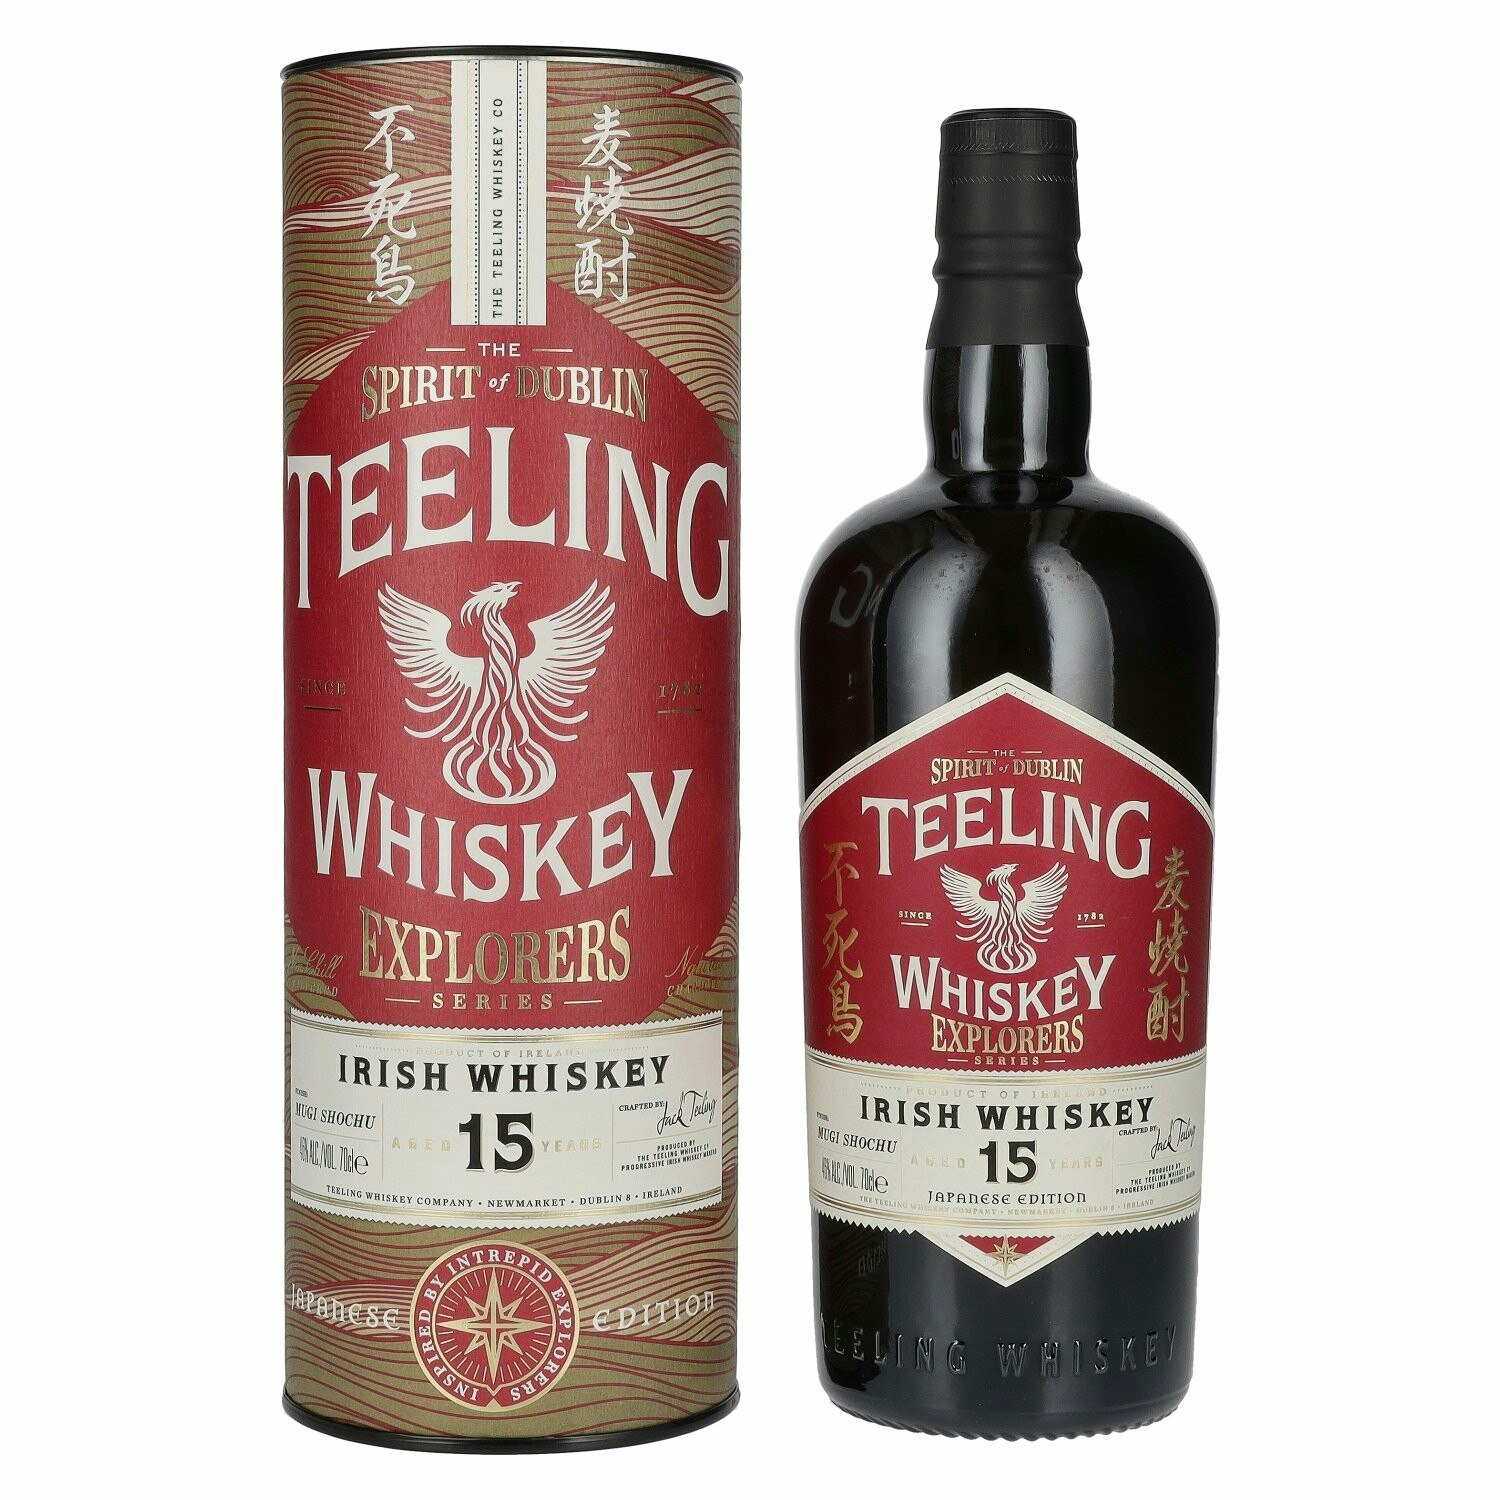 Teeling Whiskey 15 Years Old EXPLORERS SERIES Irish Whiskey Japanese Edition 46% Vol. 0,7l in Giftbox